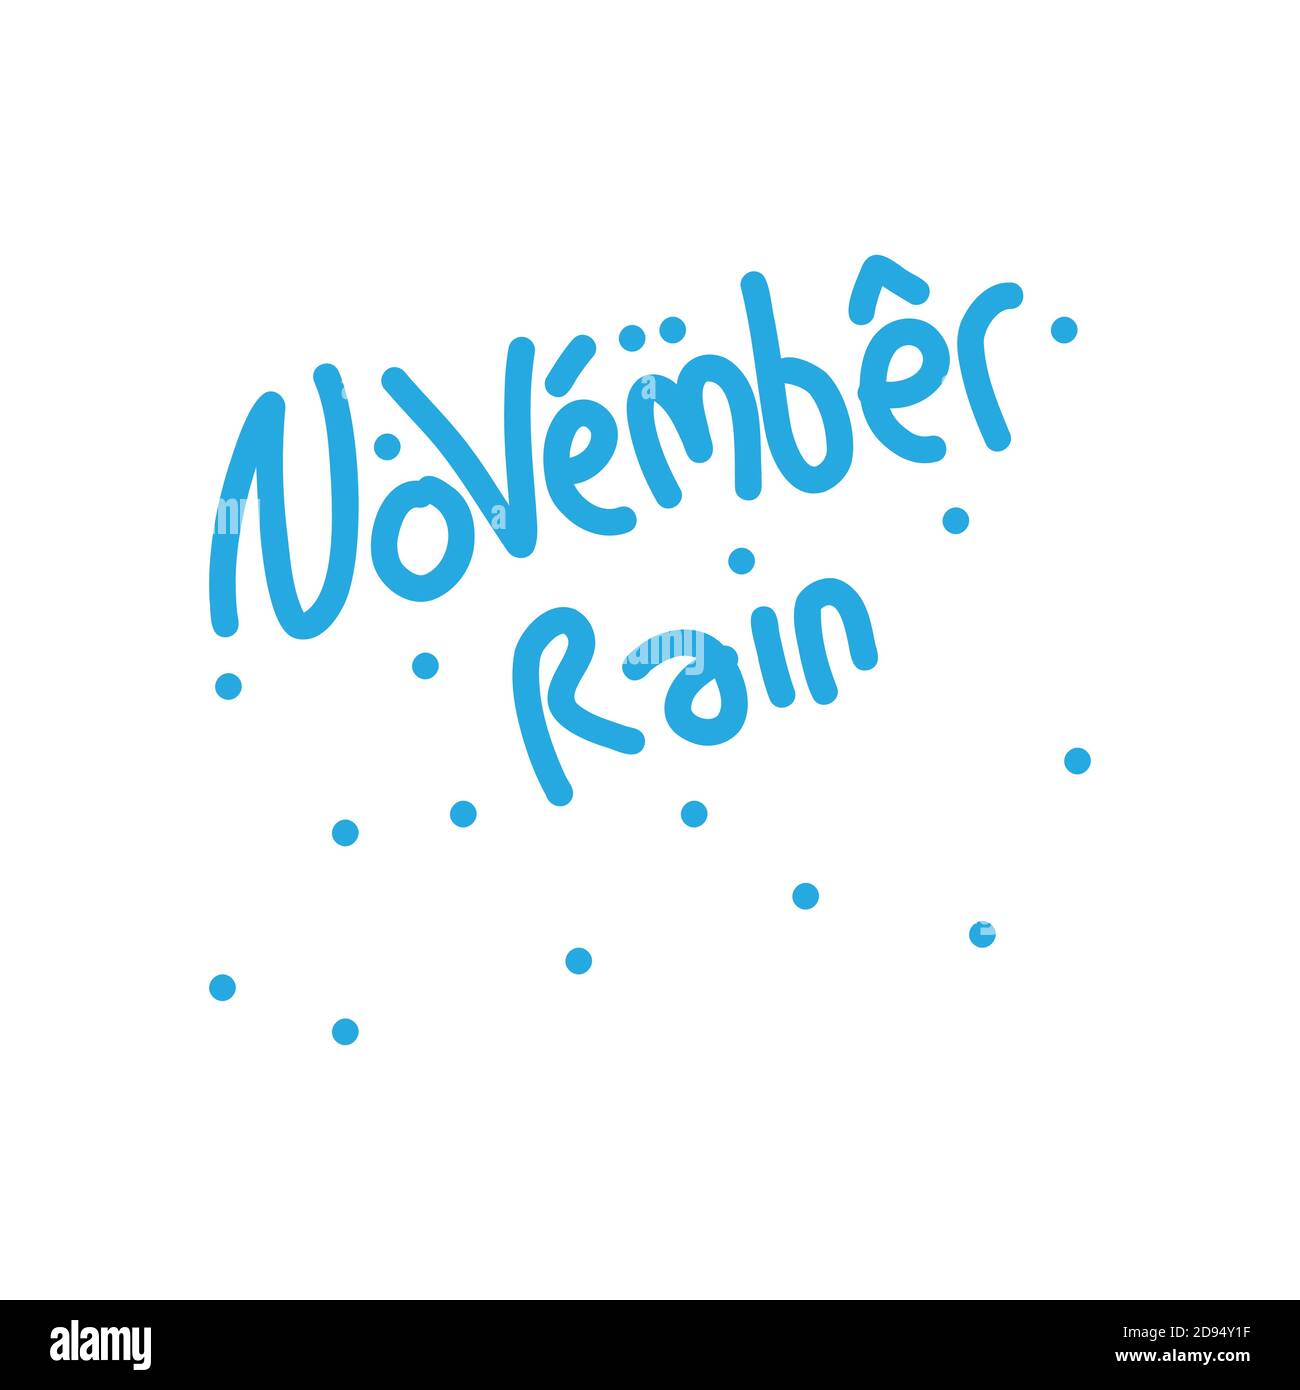 November Rain. Autumn season banner. Poster, card design with inscription, colorful imprints foliage, lettering phrase. Concept advertising. Stock Vector